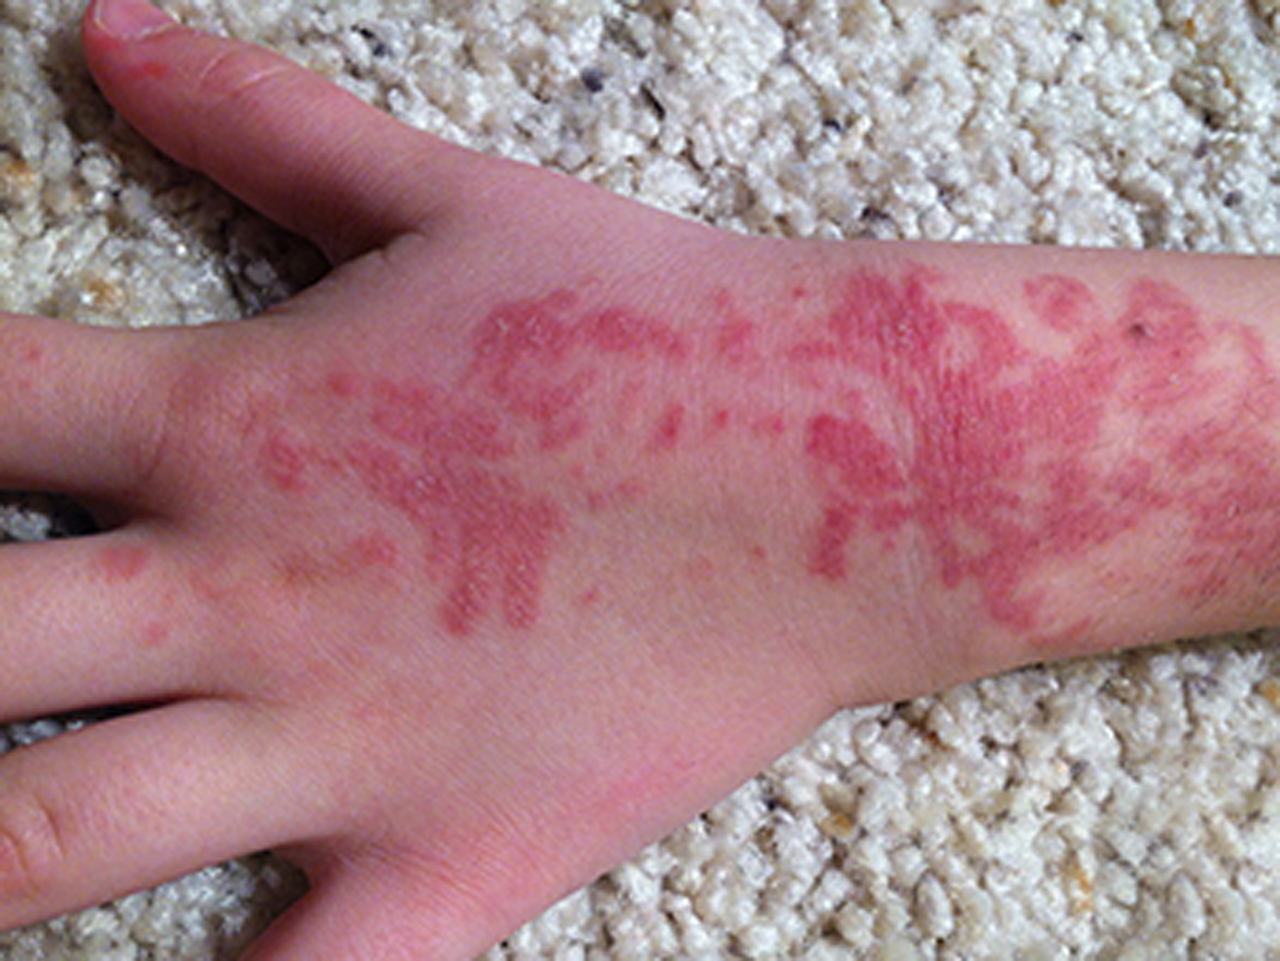 Temporary tattoos may cause long-lasting allergic reaction, FDA warns - CBS  News